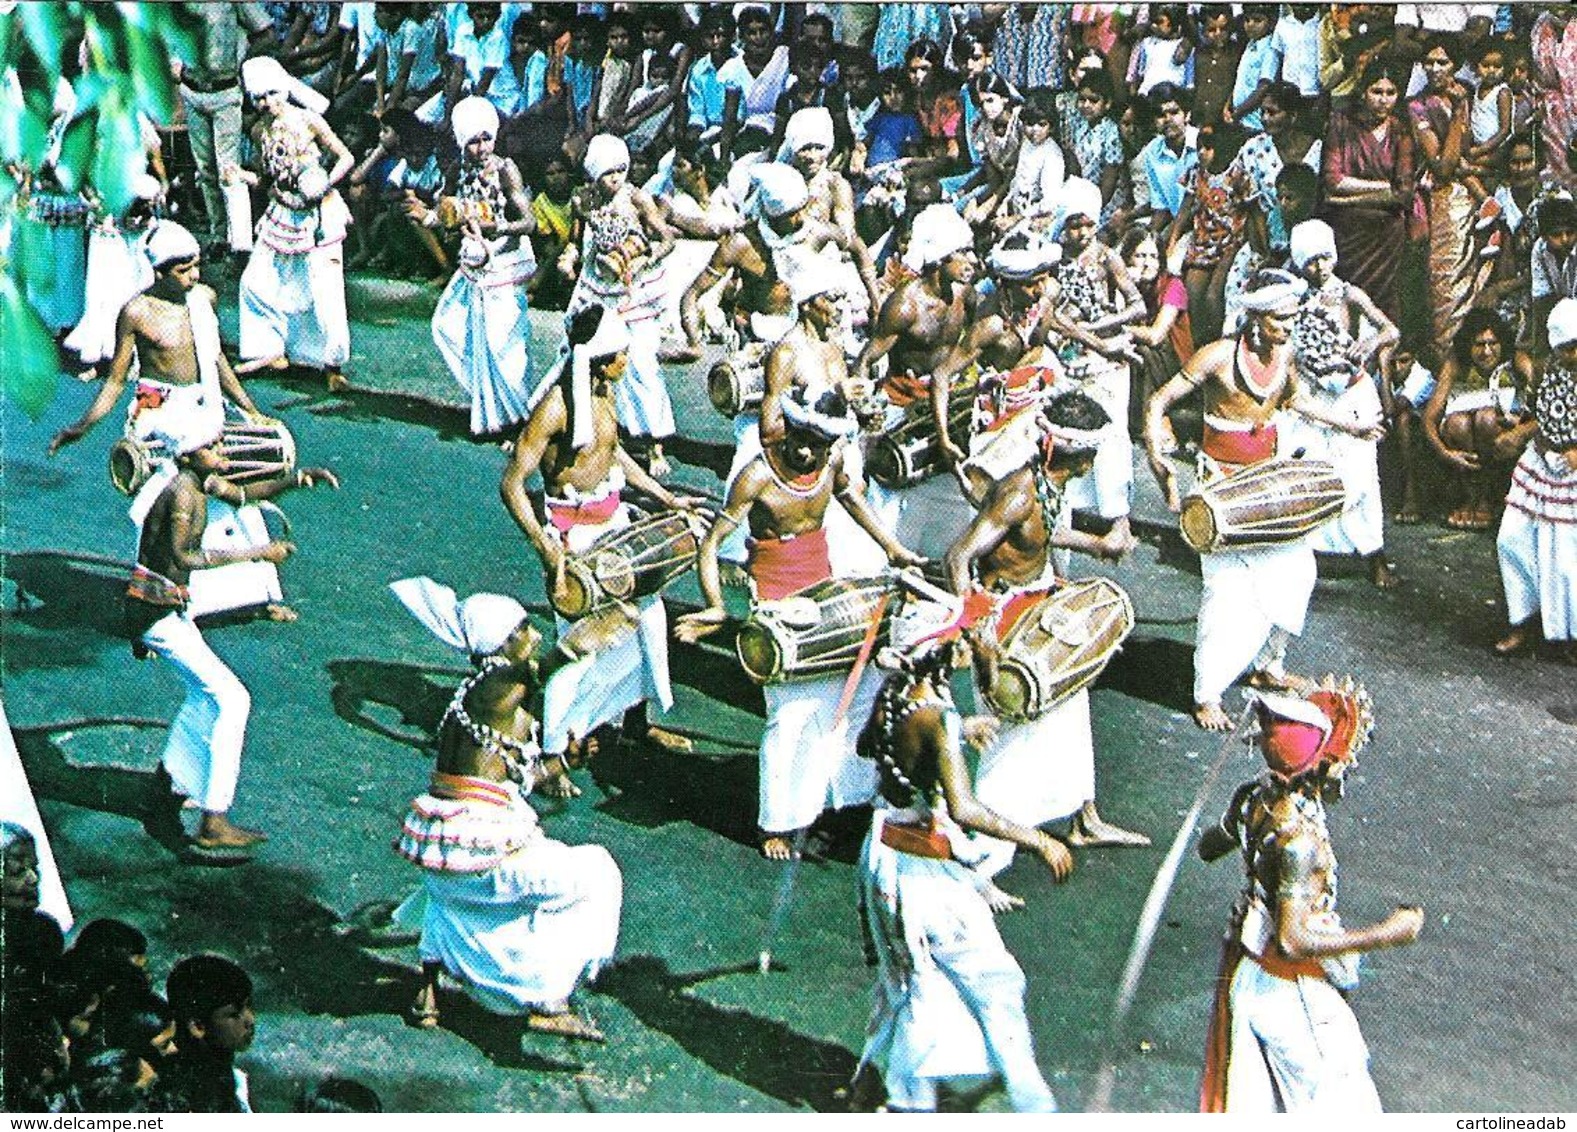 [MD3080] CPM - SRI LANKA CYLON - KANDYAN DRUMMERS AND DANCER LEADING THE PROCESSION - Non Viaggiata - Sri Lanka (Ceylon)